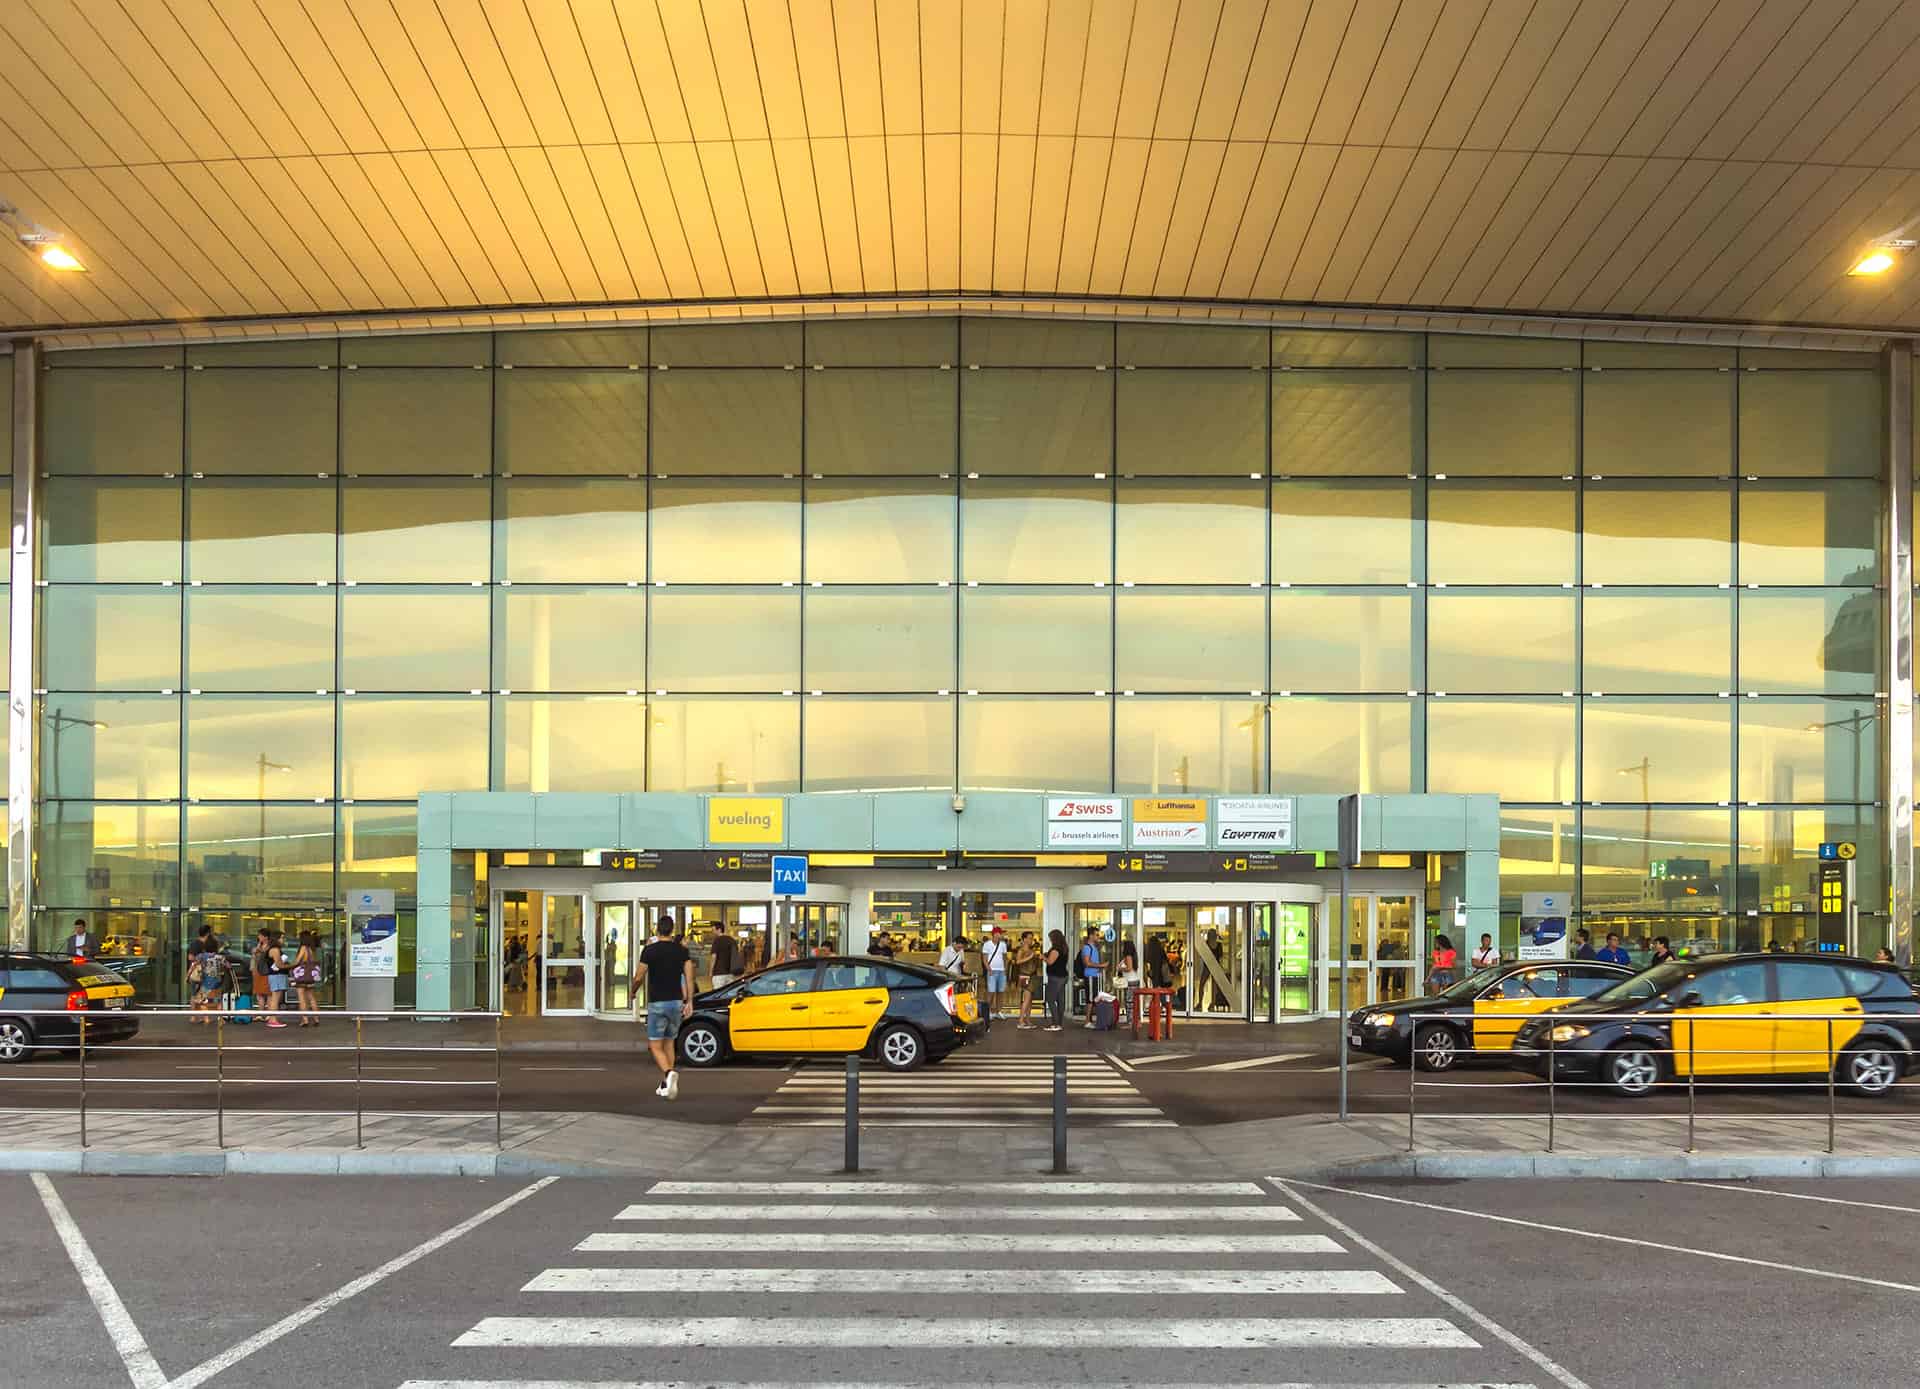 aeroport barcelone